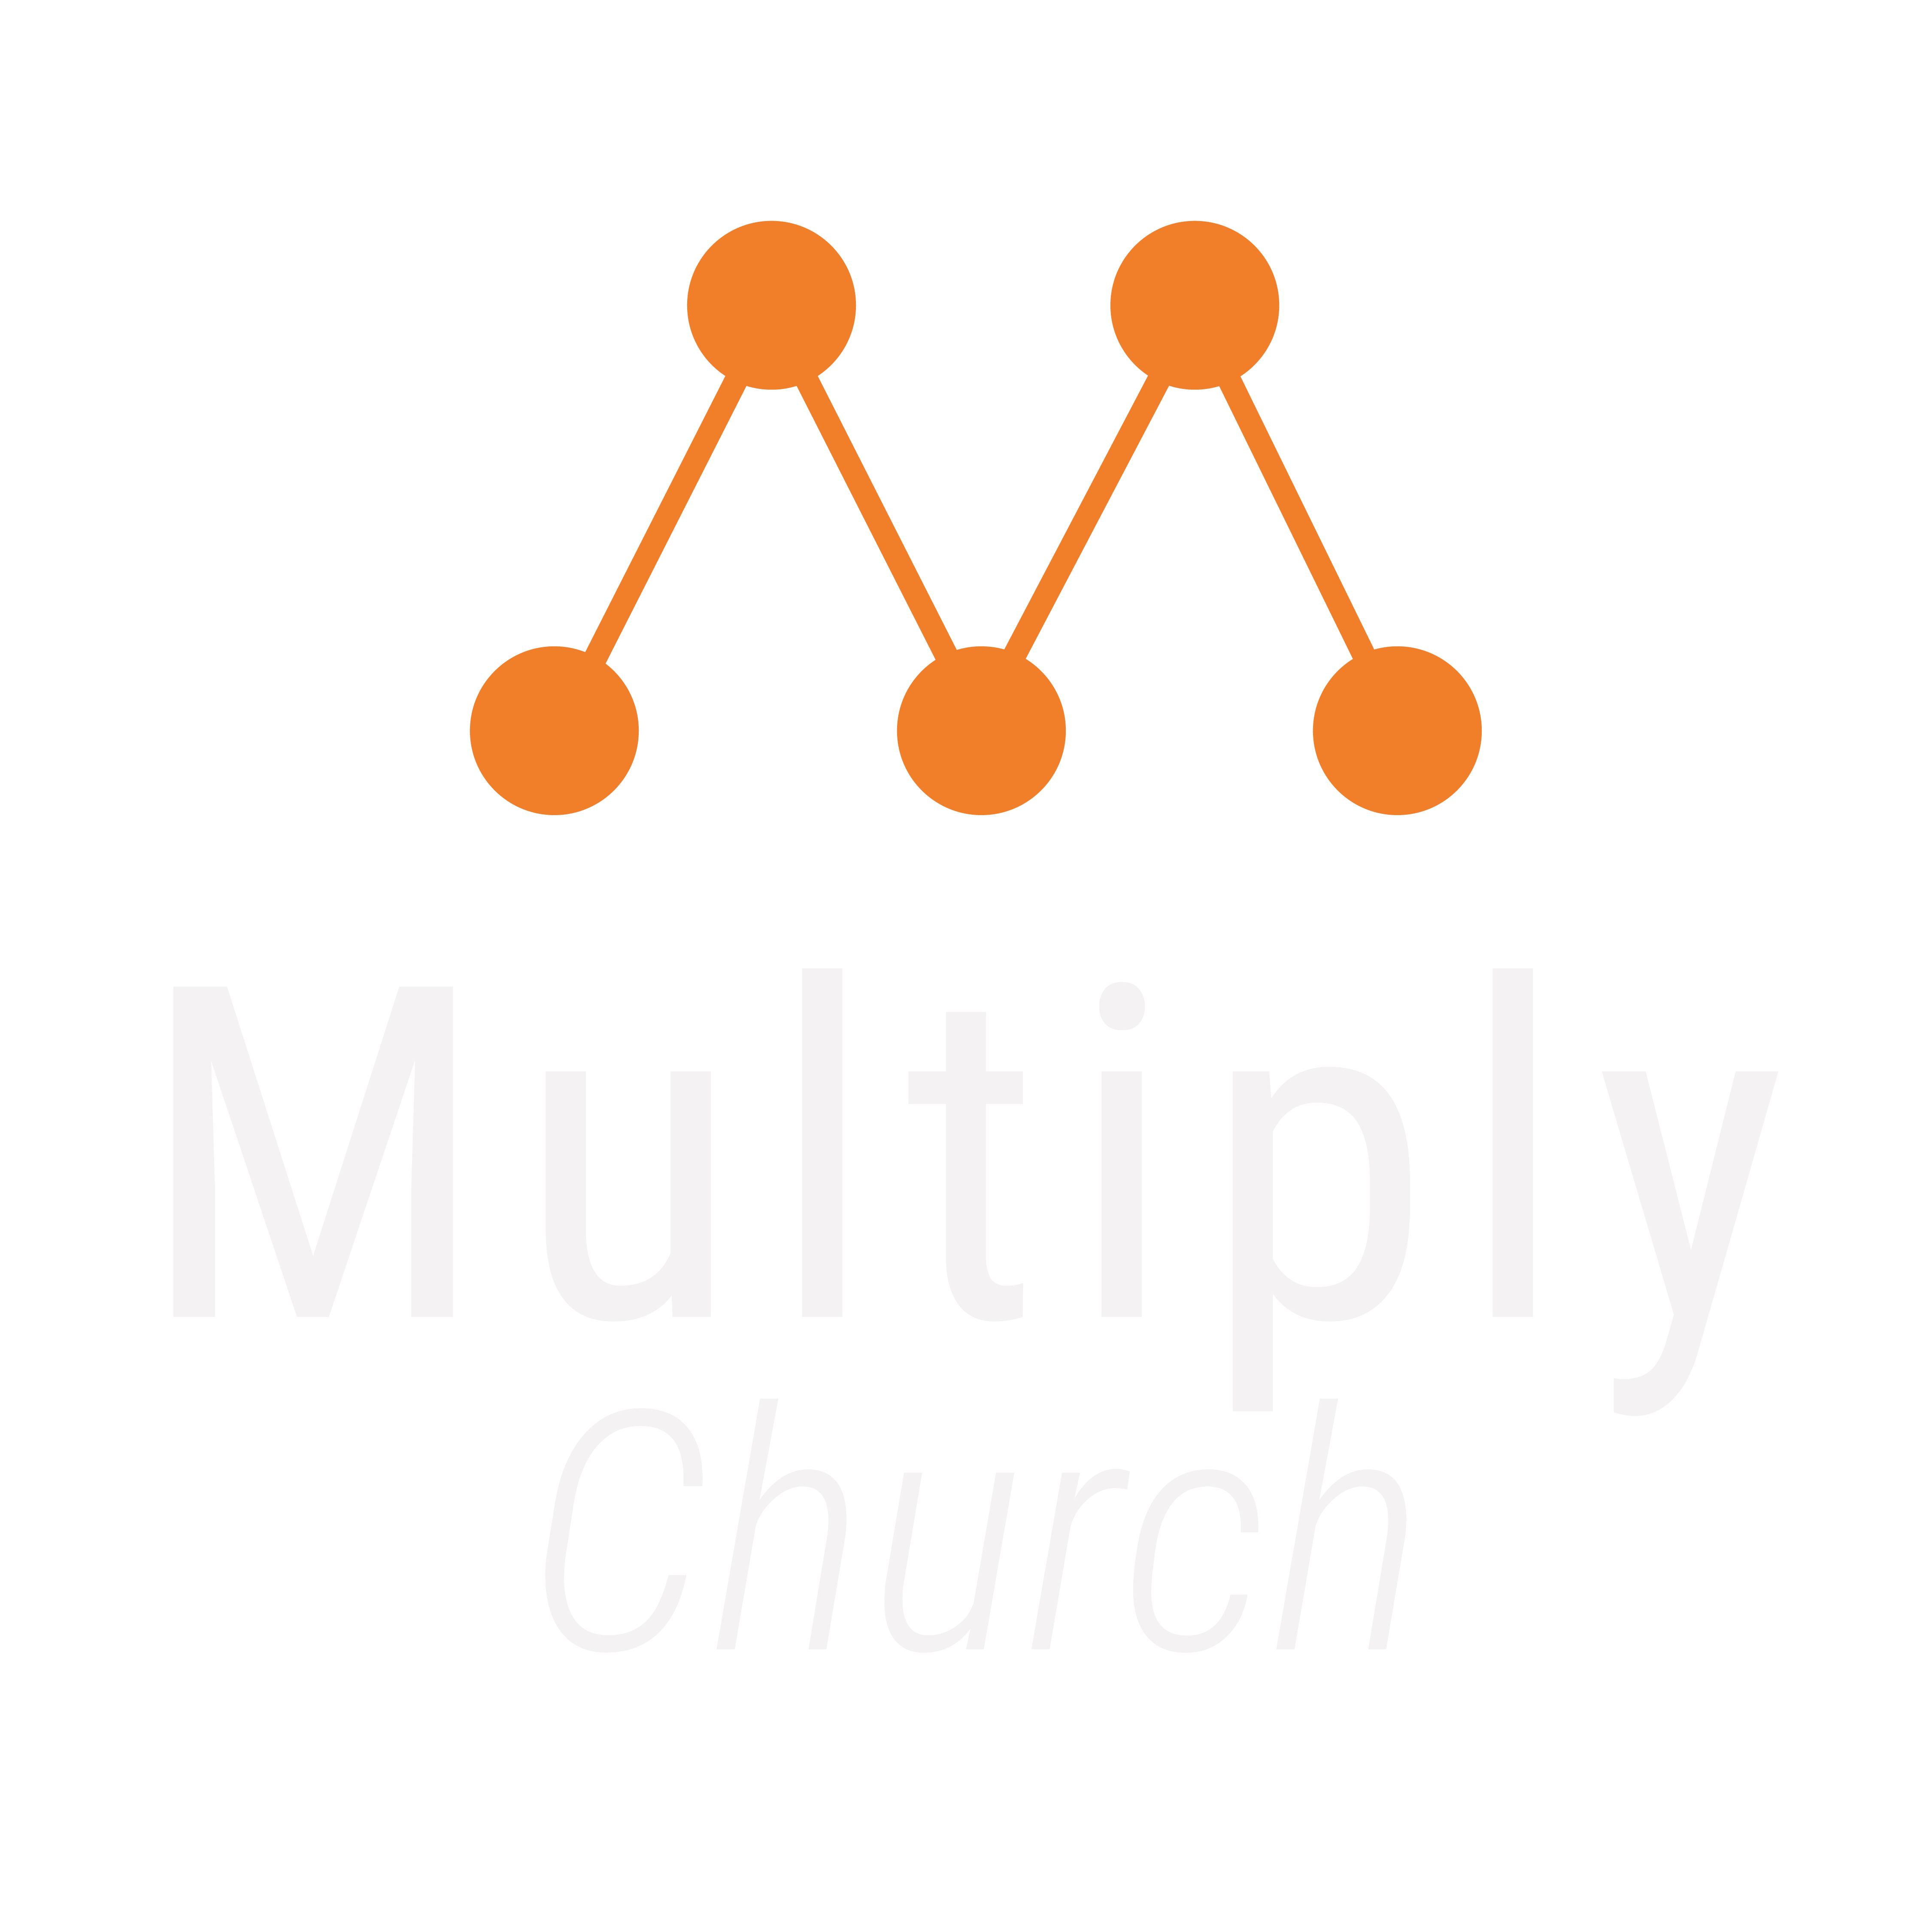 Multiply Church in Bozeman Montana